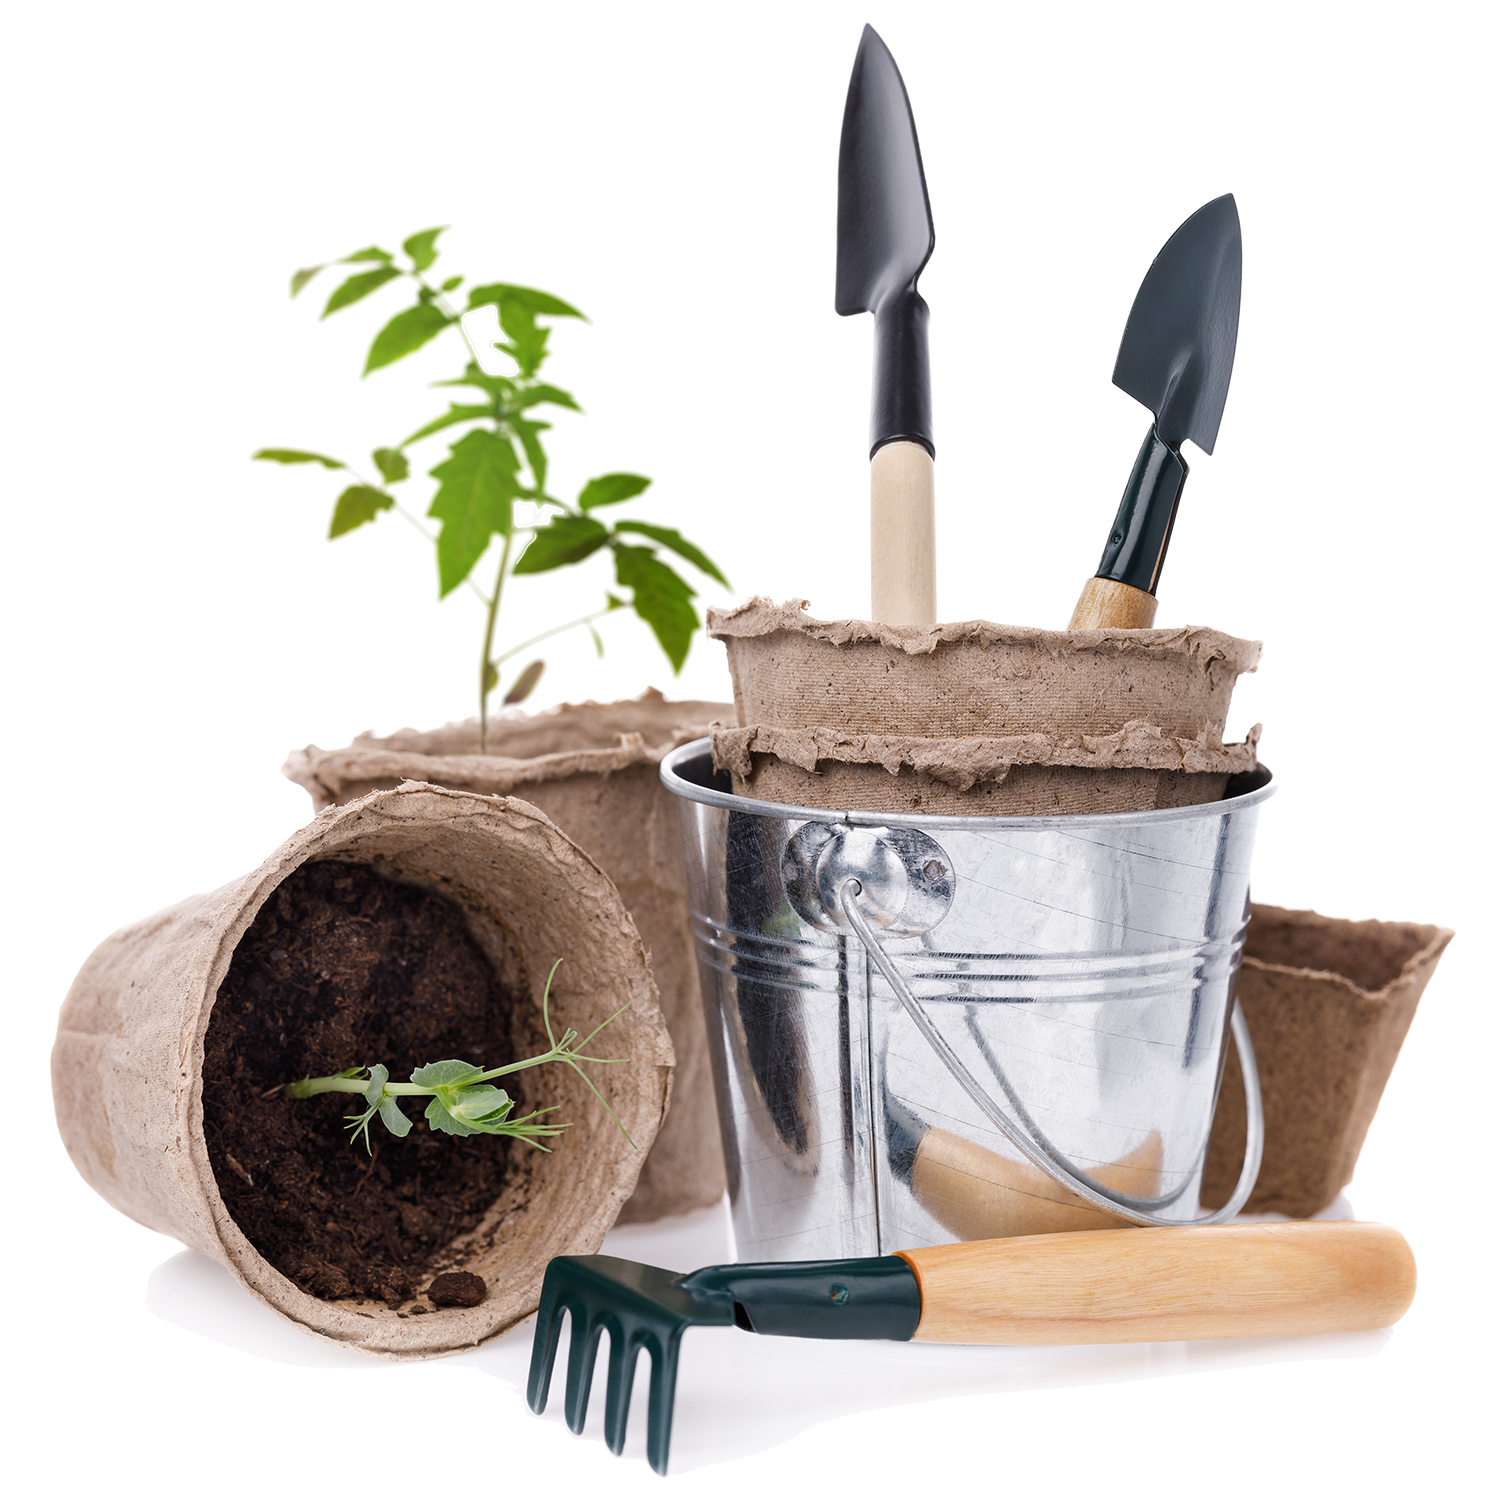 FLower Pot and Garden Tools